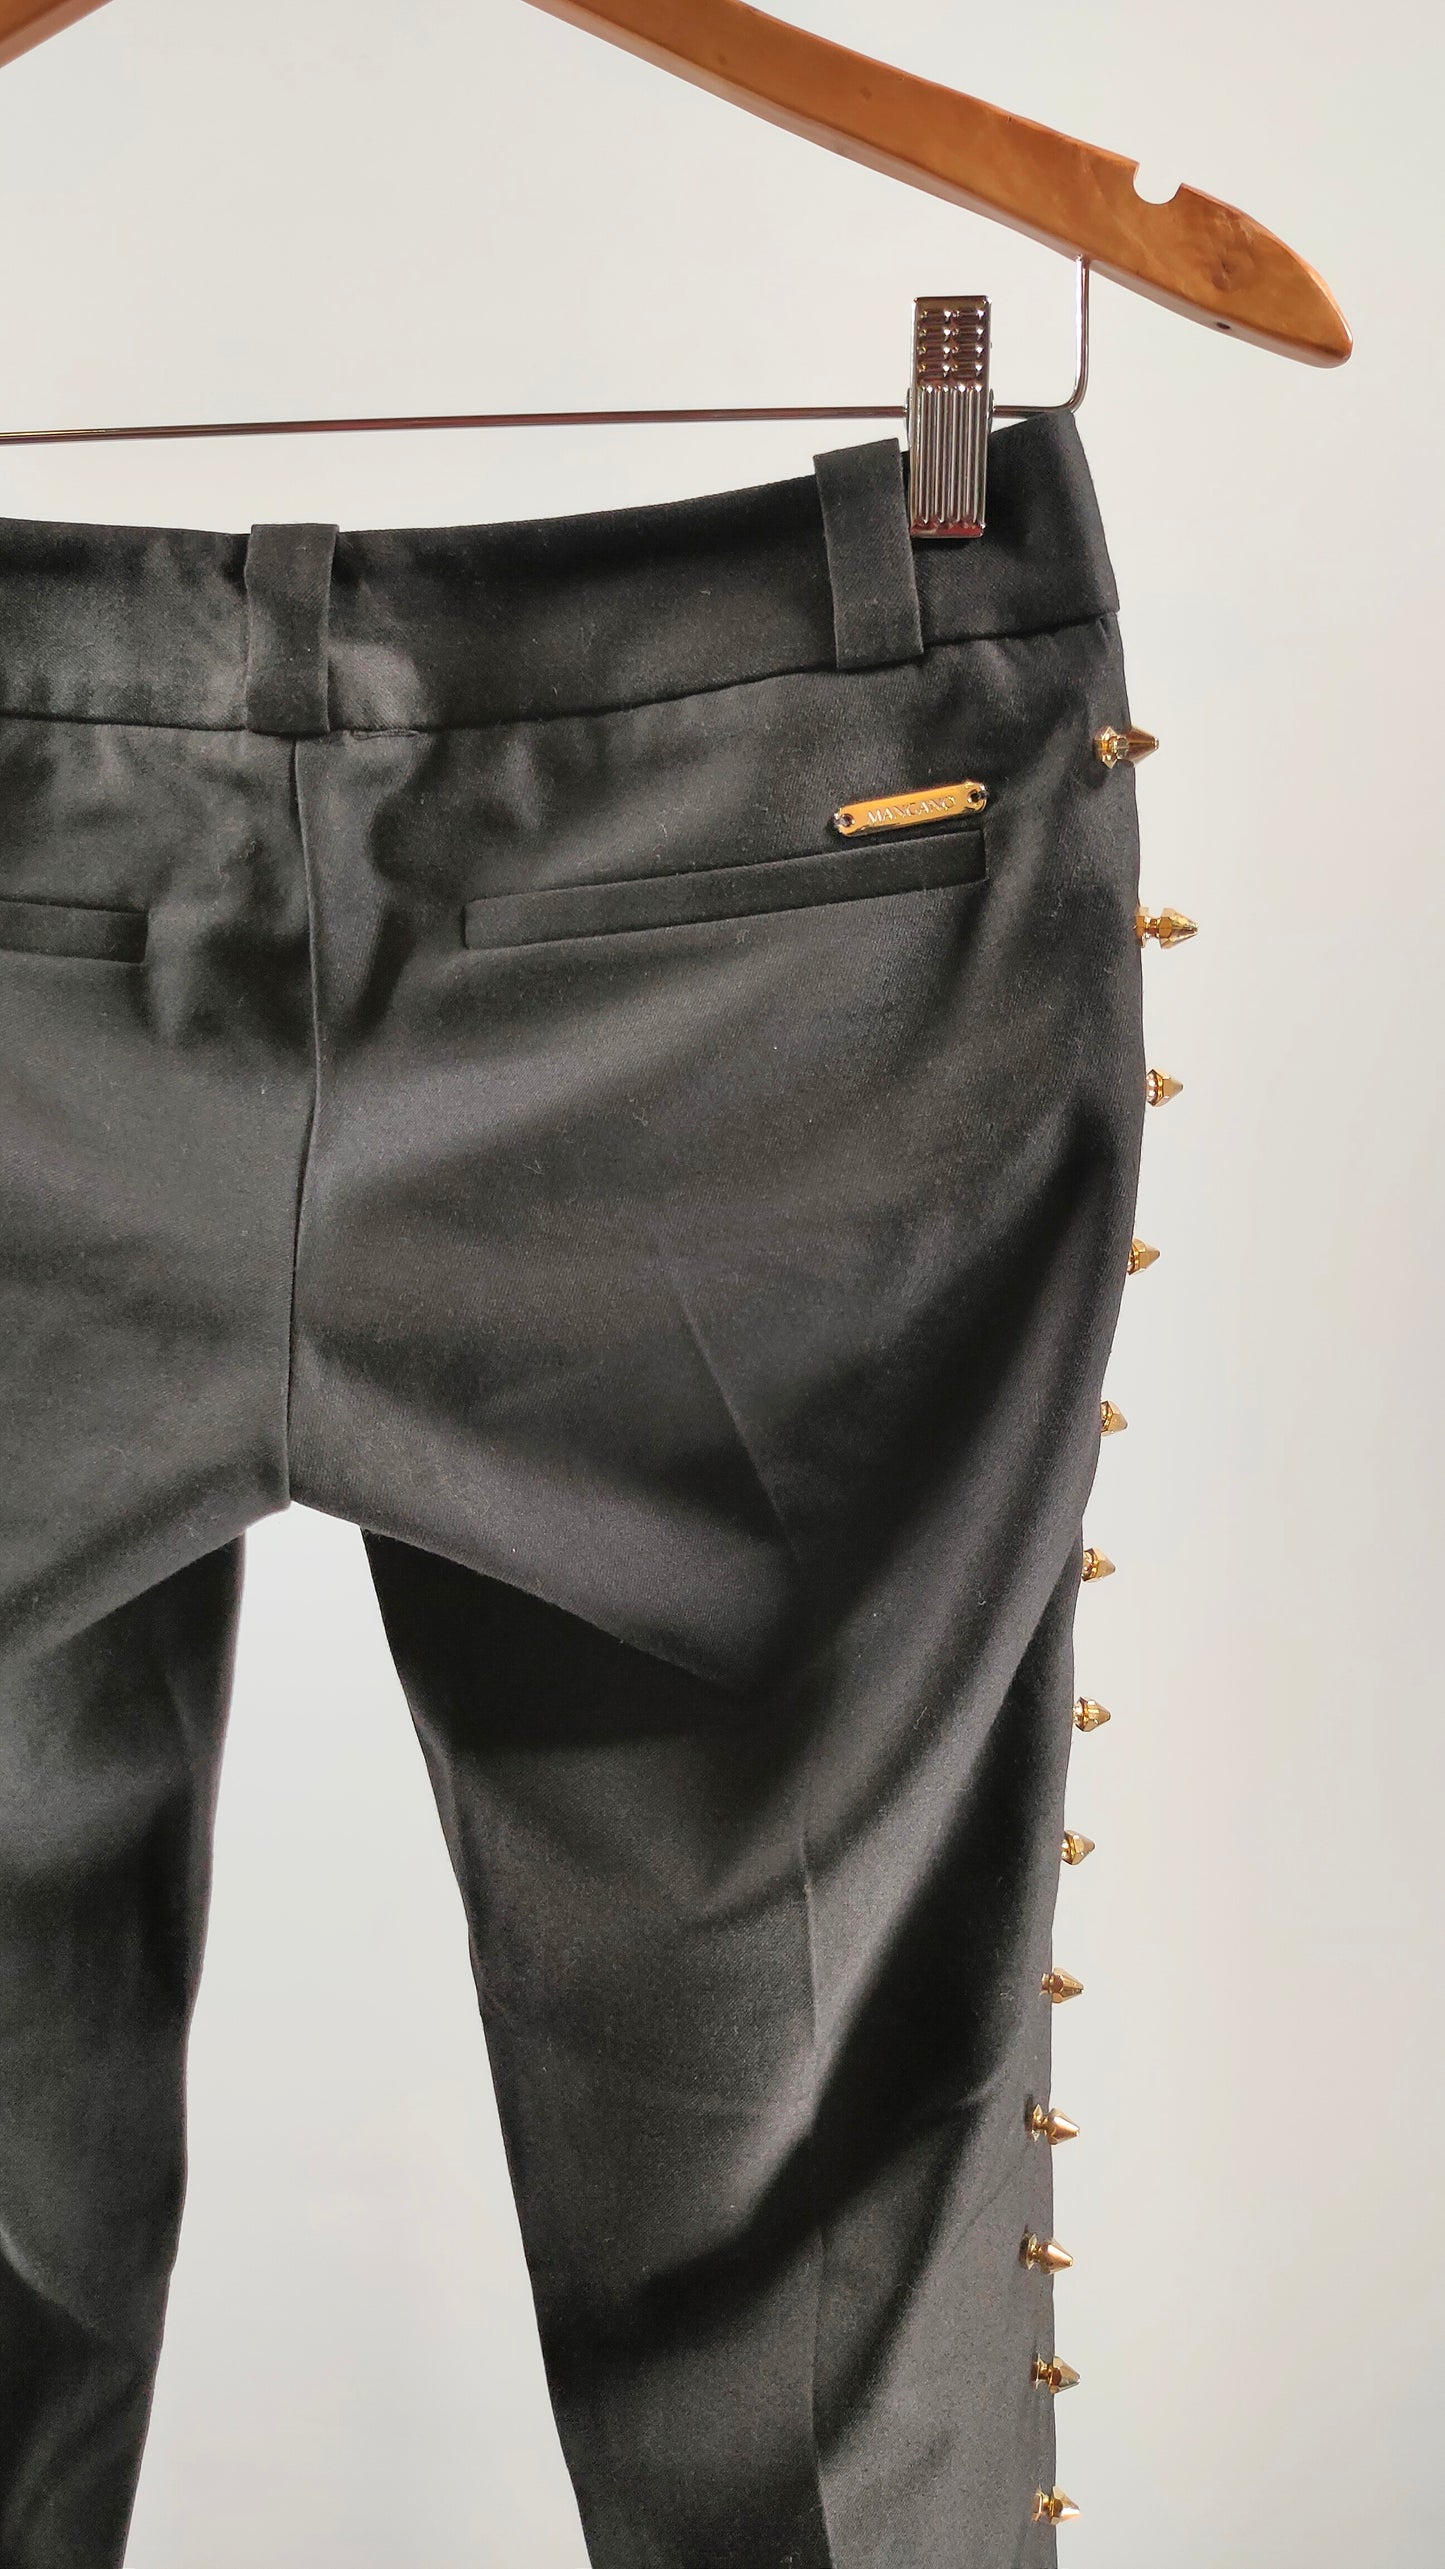 Pantalones con apliques dorados en lateral